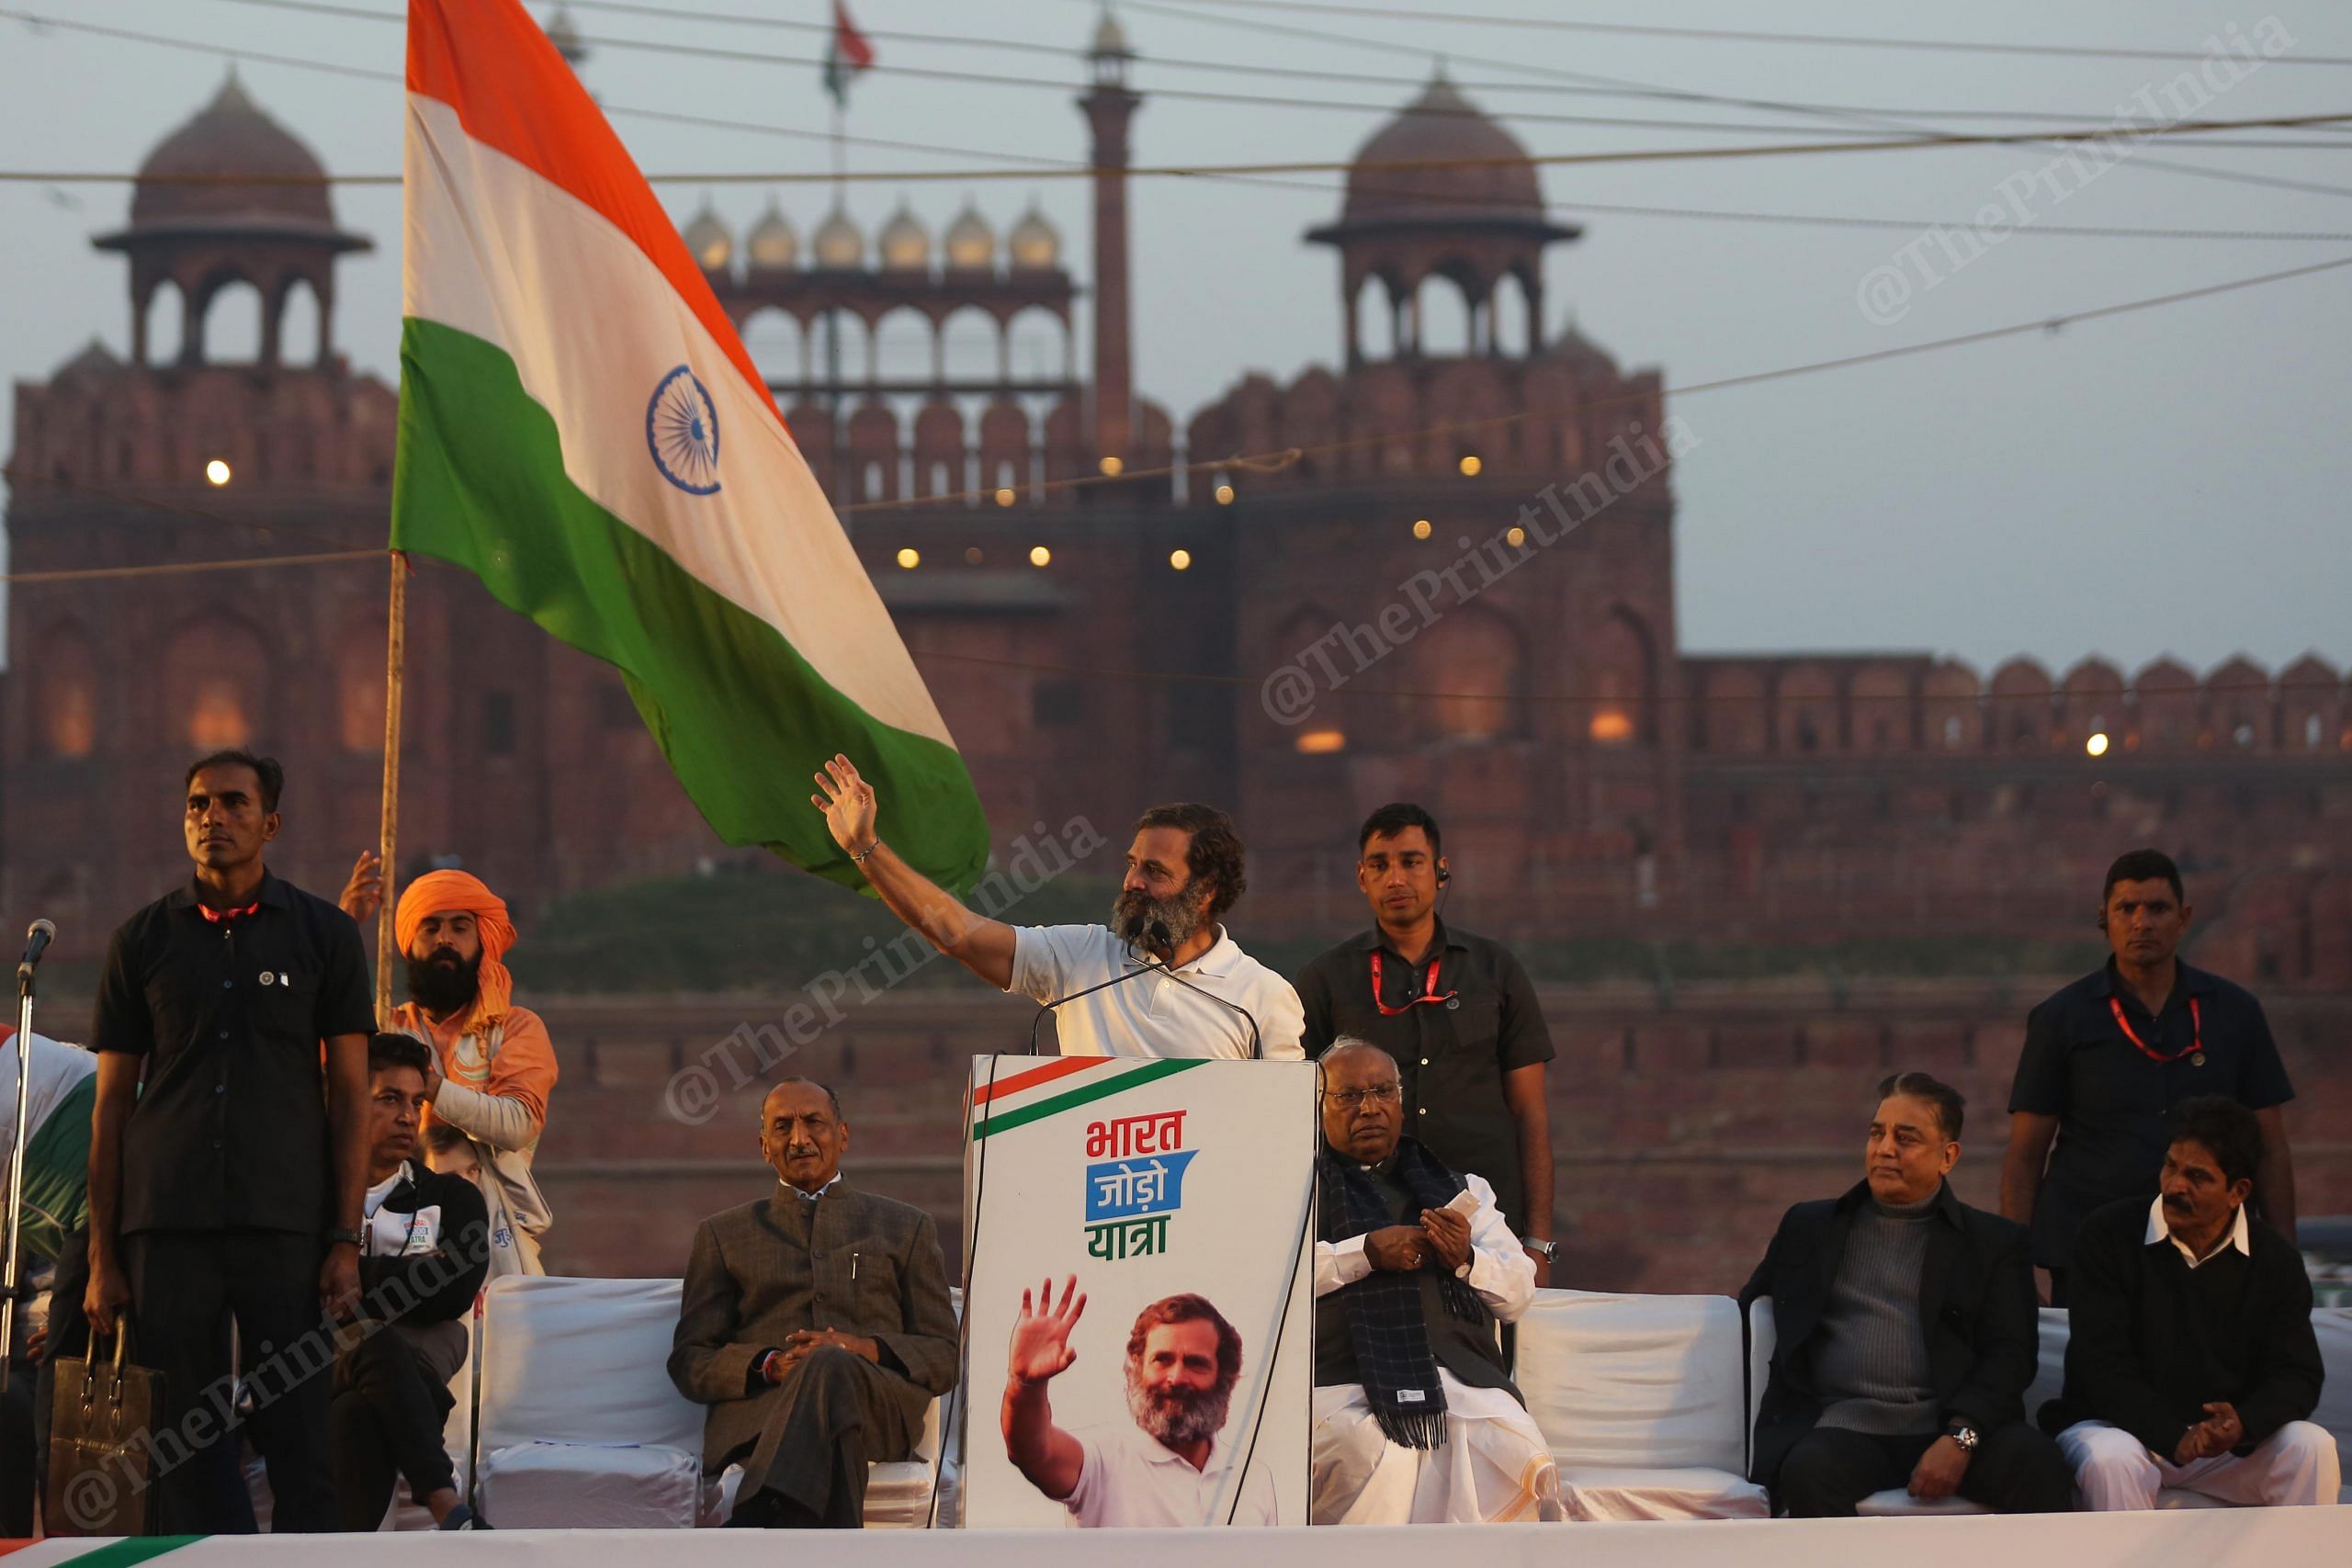 Rahul Gandhi addresses the public at Red Fort | Photo: Suraj Singh Bisht | ThePrint